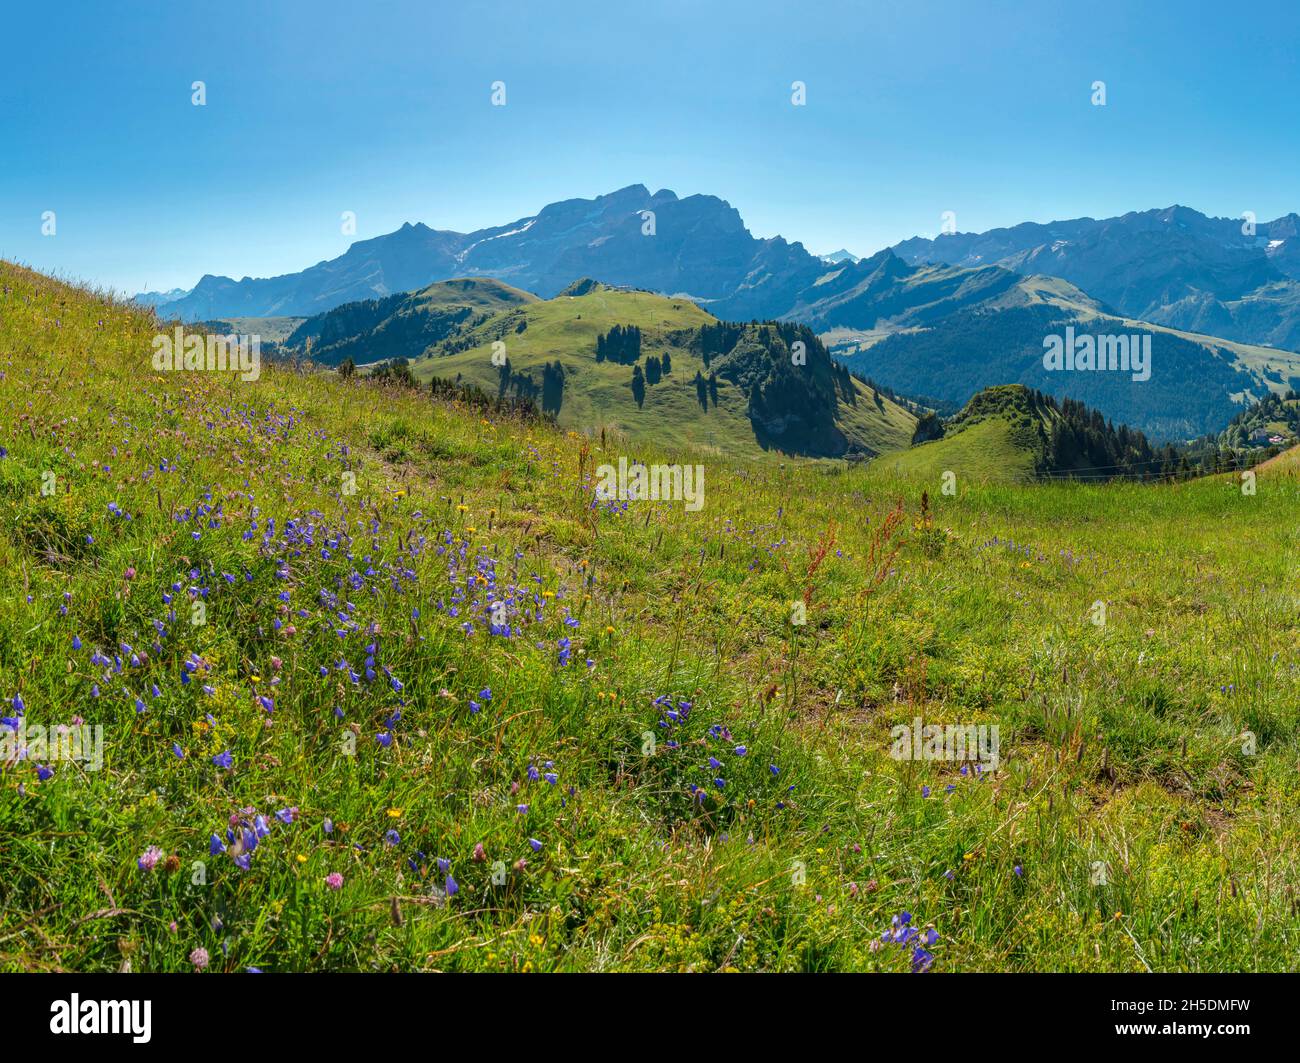 Col de Bretaye *** Local Caption ***  Villars-sur-Ollon, Switzerland, landscape, field,  meadow, flowers, summer, mountains, hills, Stock Photo